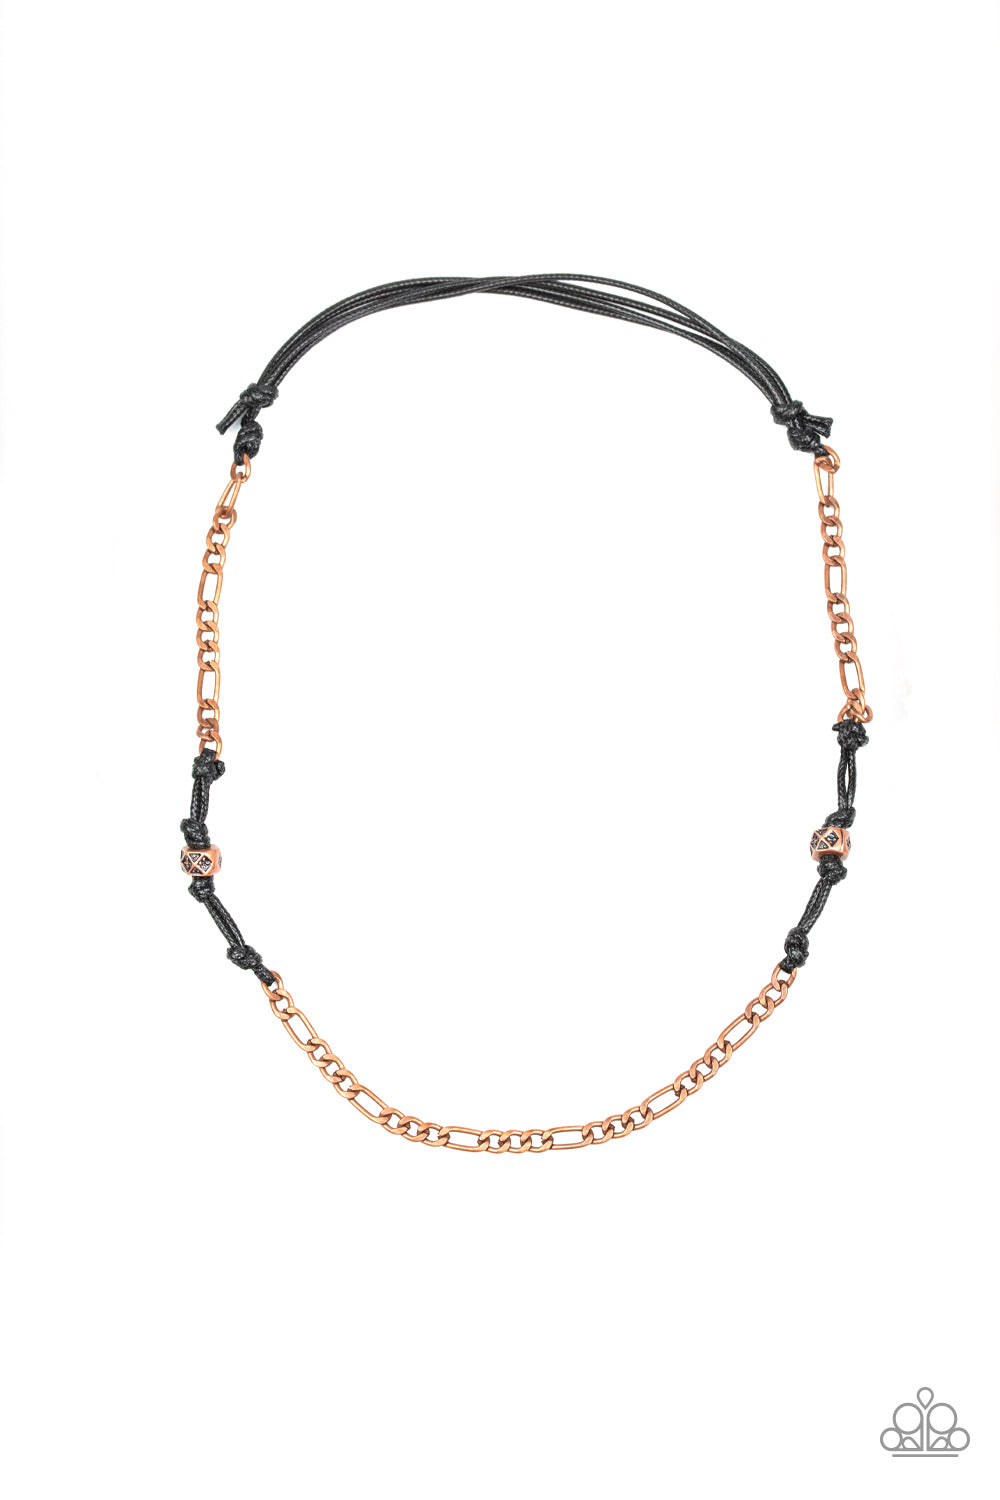 Rural Renegade - Copper Necklace